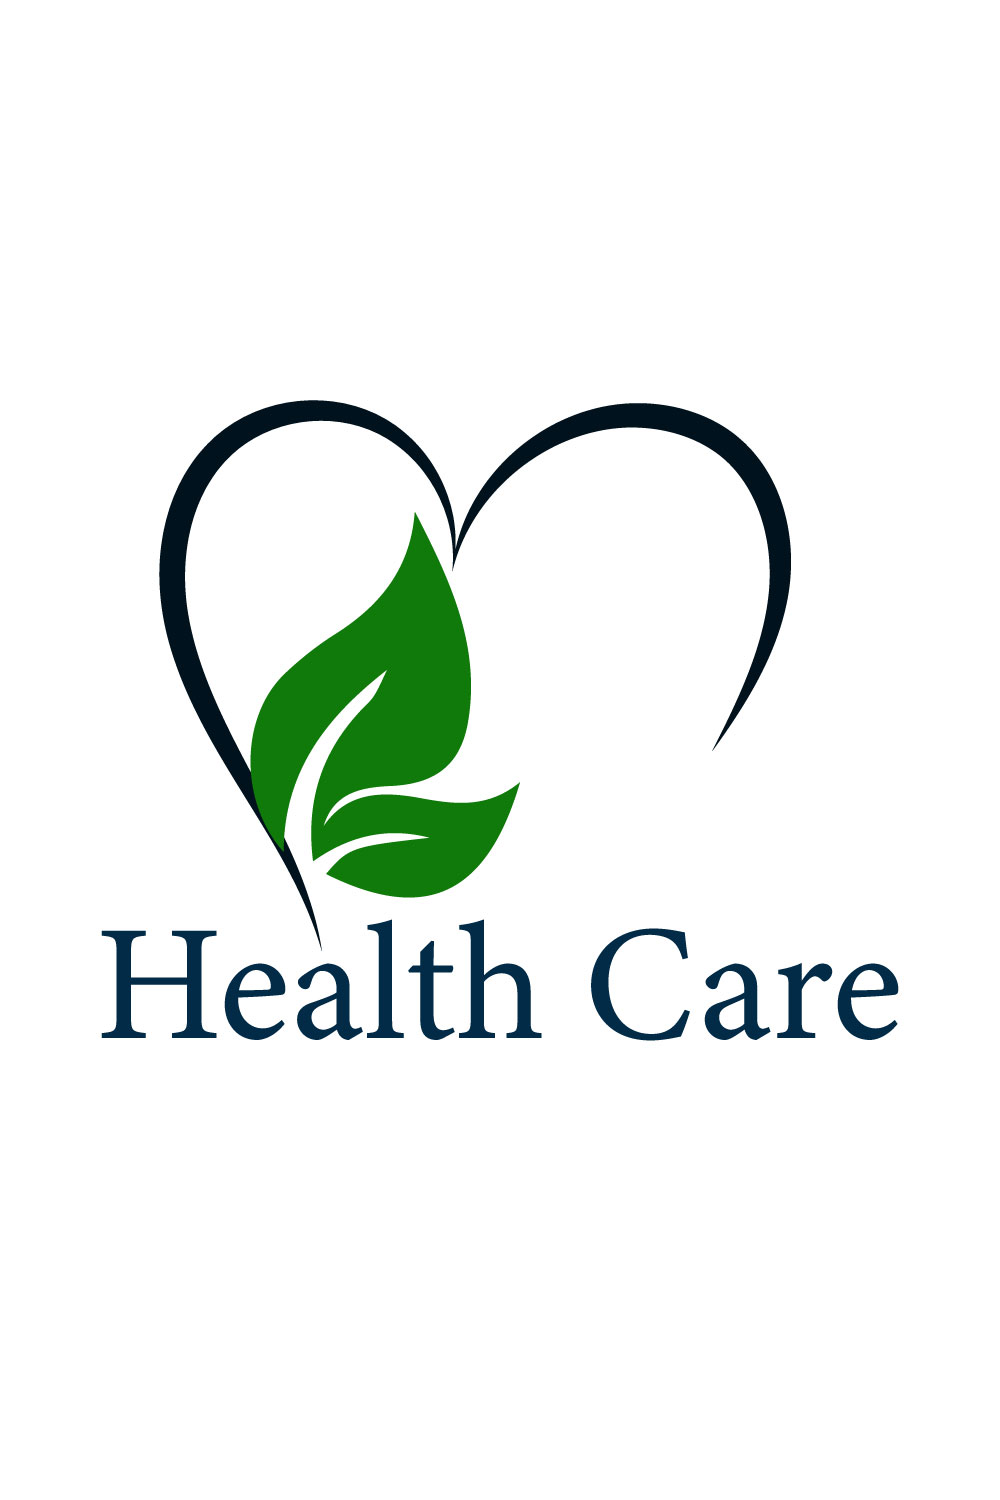 Free Heart Association logo pinterest preview image.